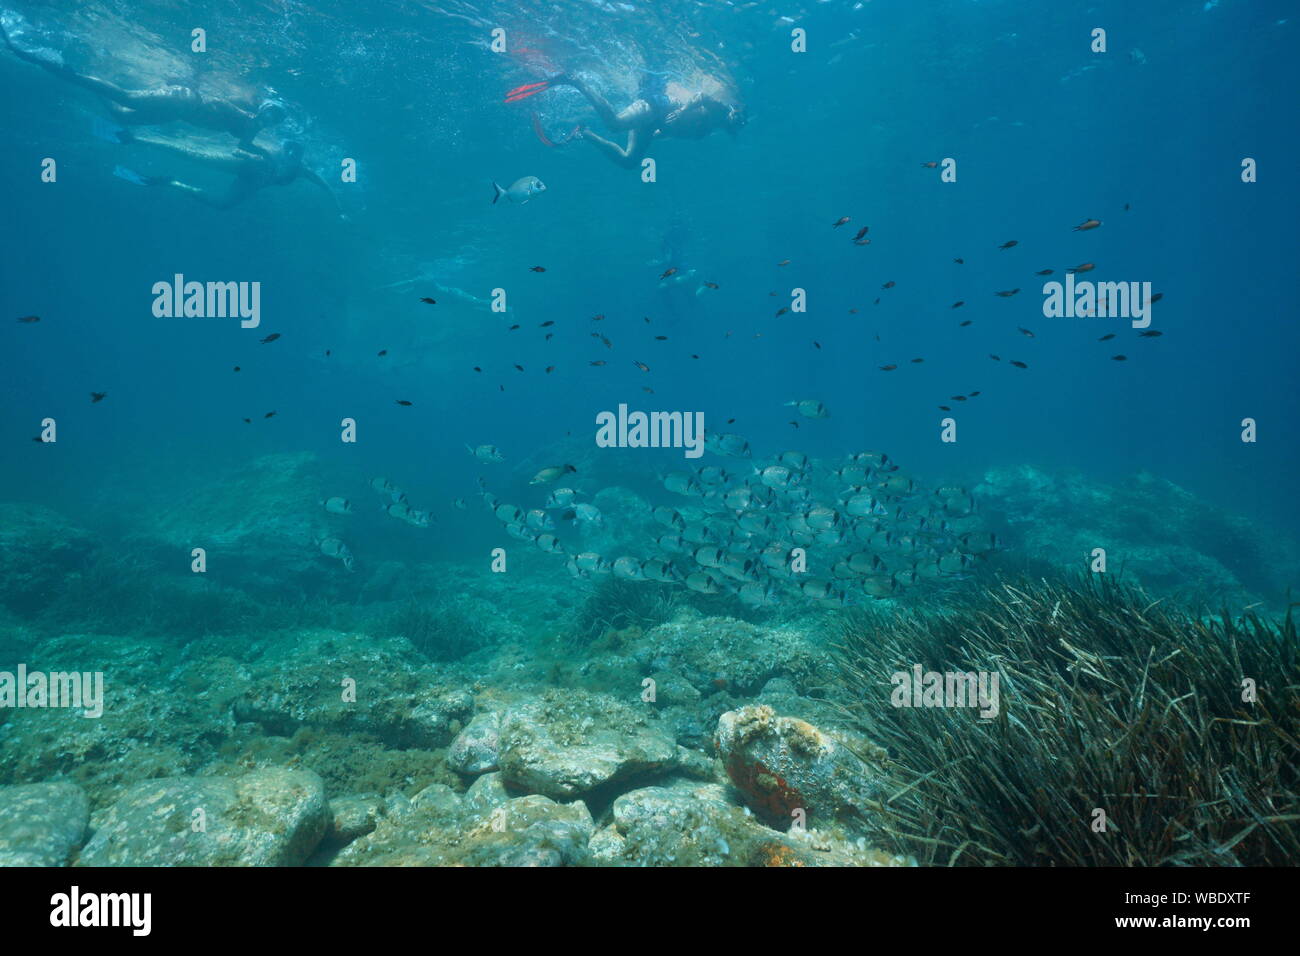 Underwater Seascape In The Mediterranean Sea, A School Of Fish